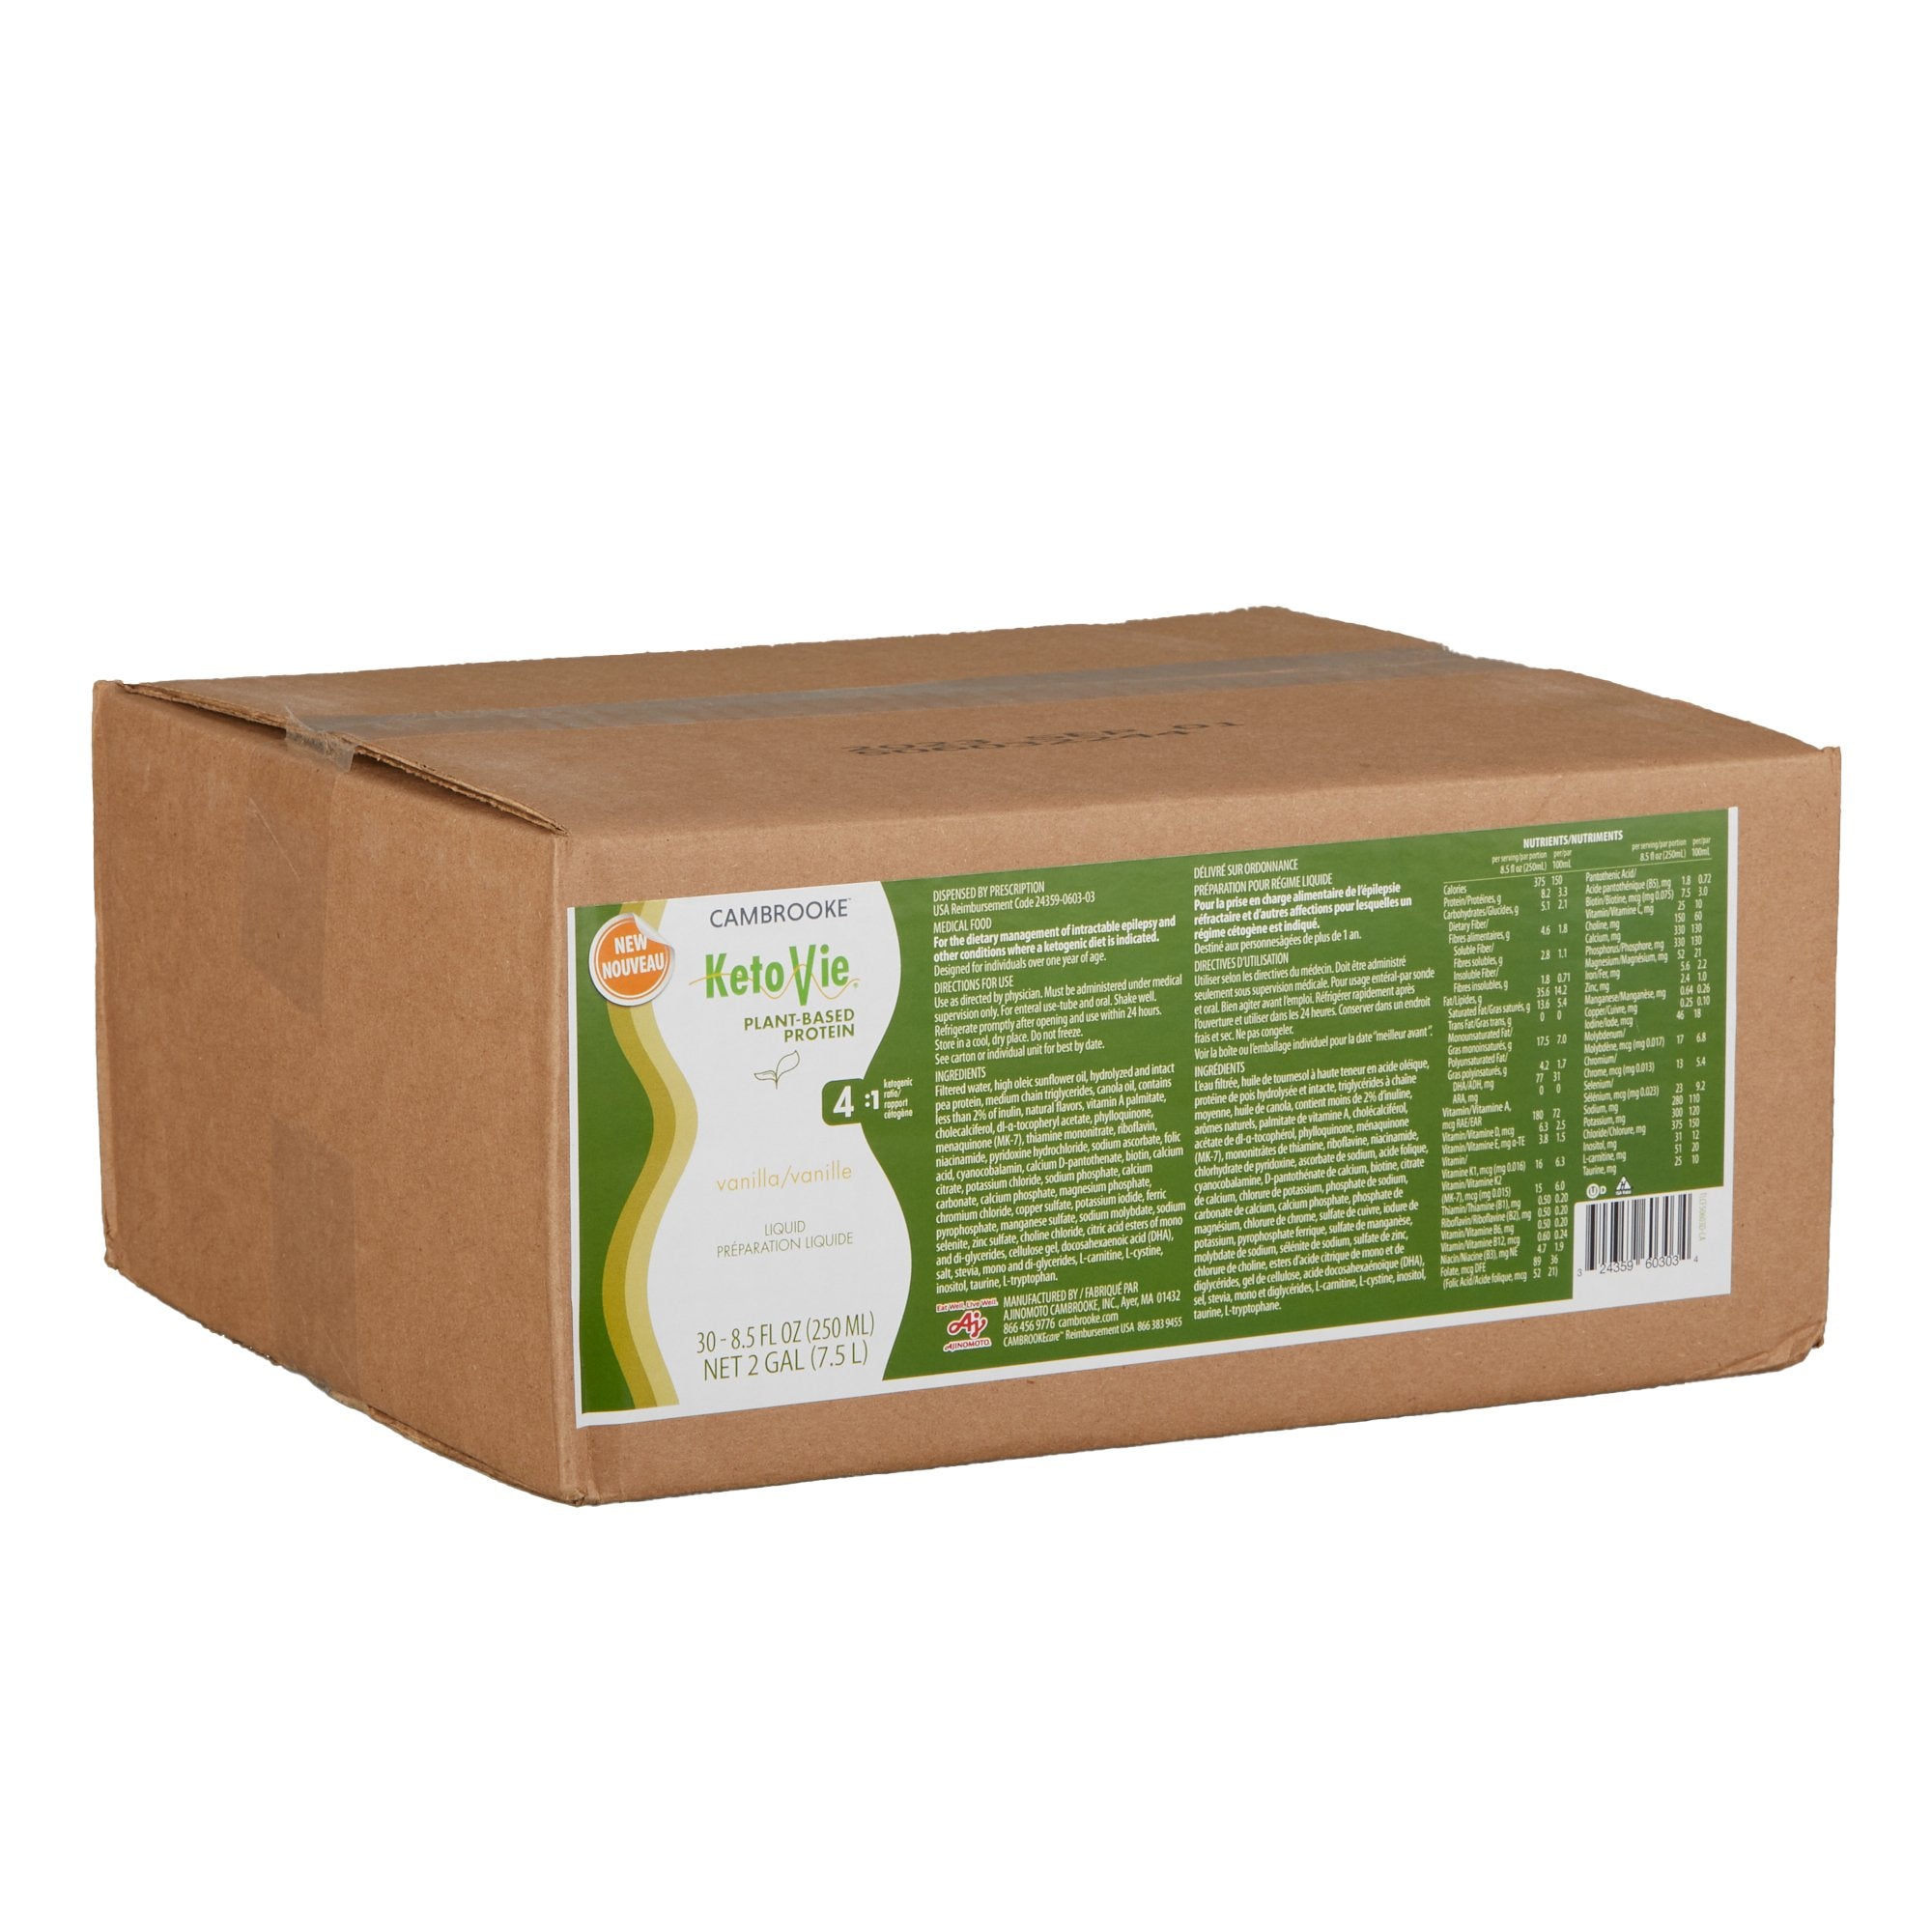 Oral Supplement KetoVie® 4:1 Plant-Based Protein Vanilla Flavor Liquid 8.5 oz. Carton (30 Units)